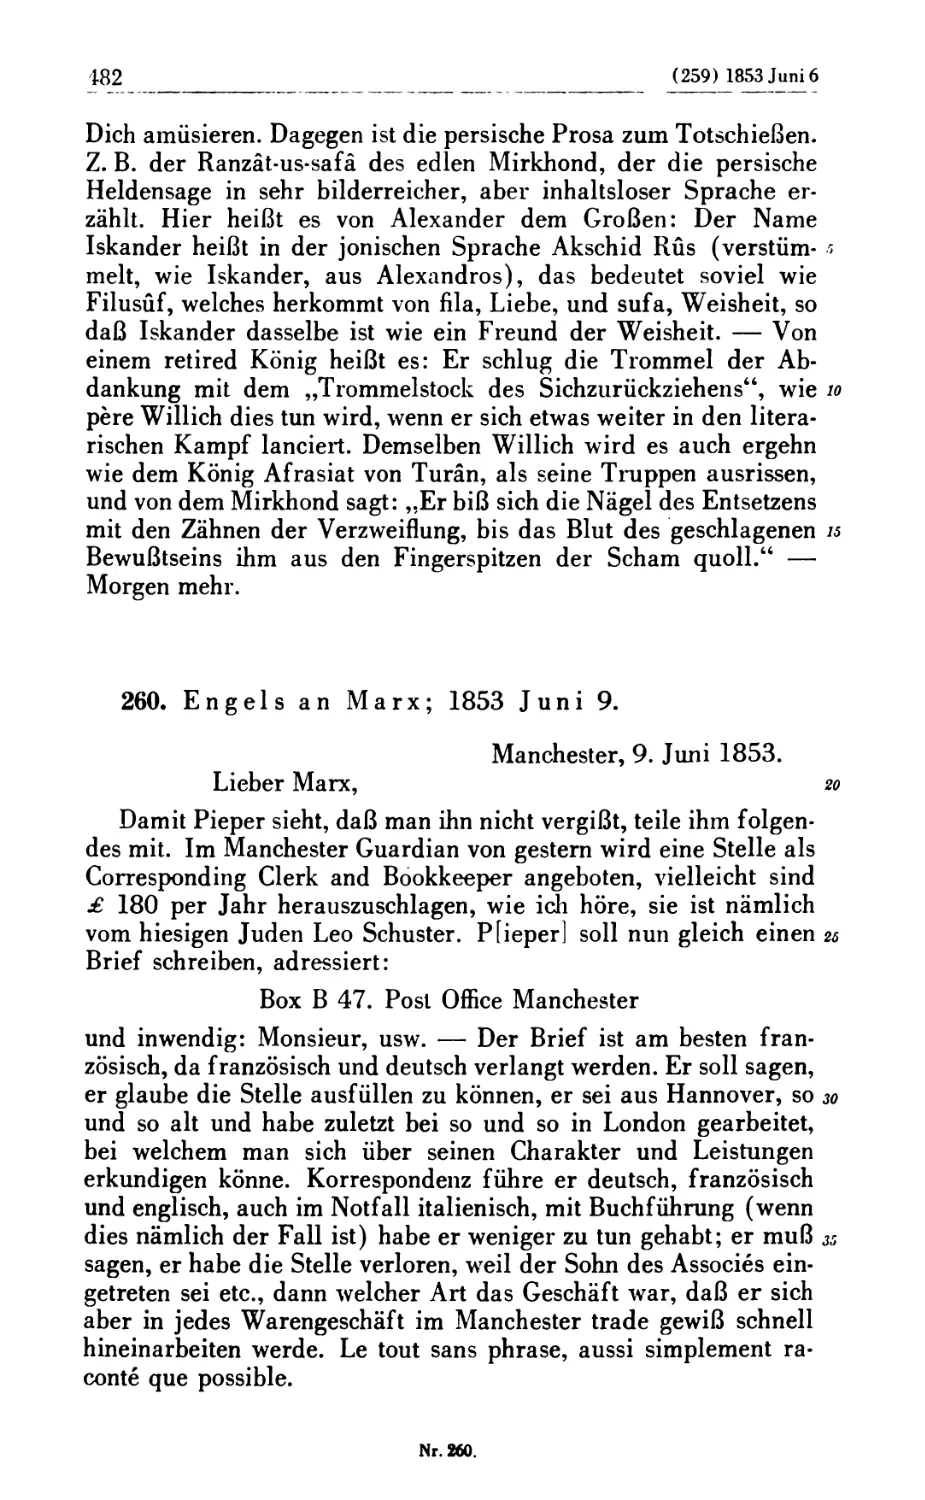 260. Engels an Marx; 1853 Juni 9